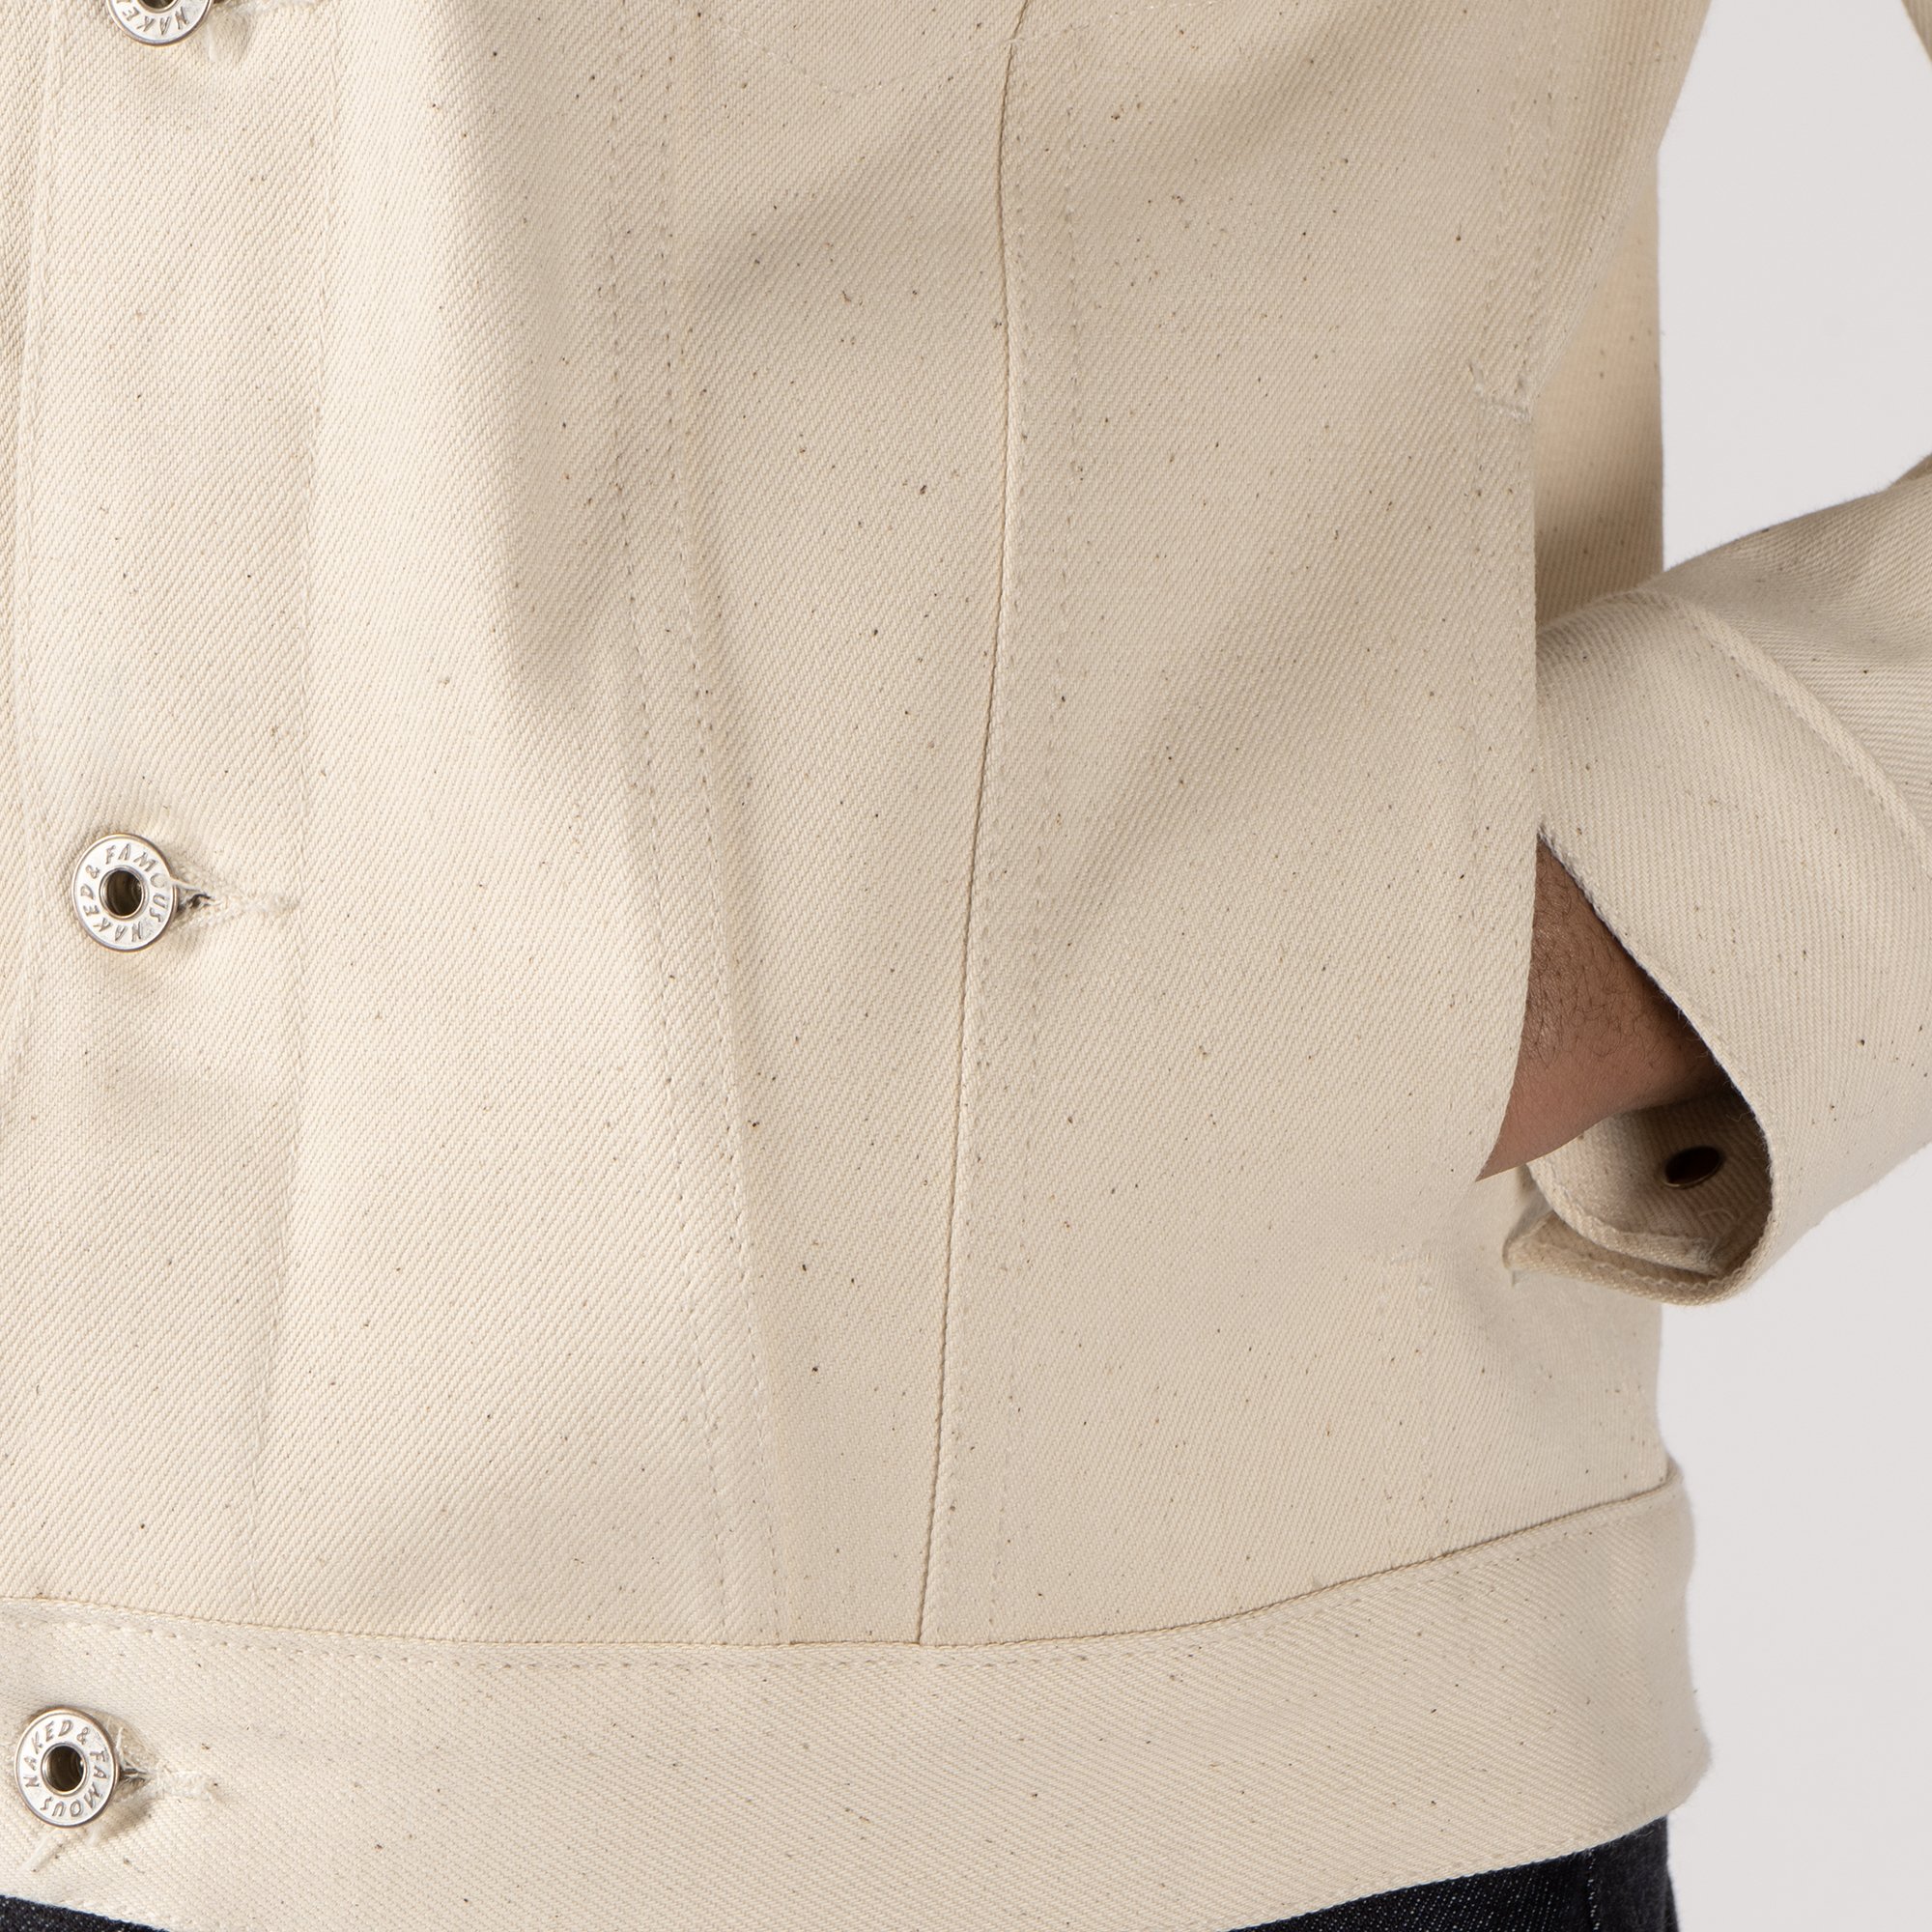  Denim Jacket - All Natural Organic Cotton Selvedge - hand pocket 